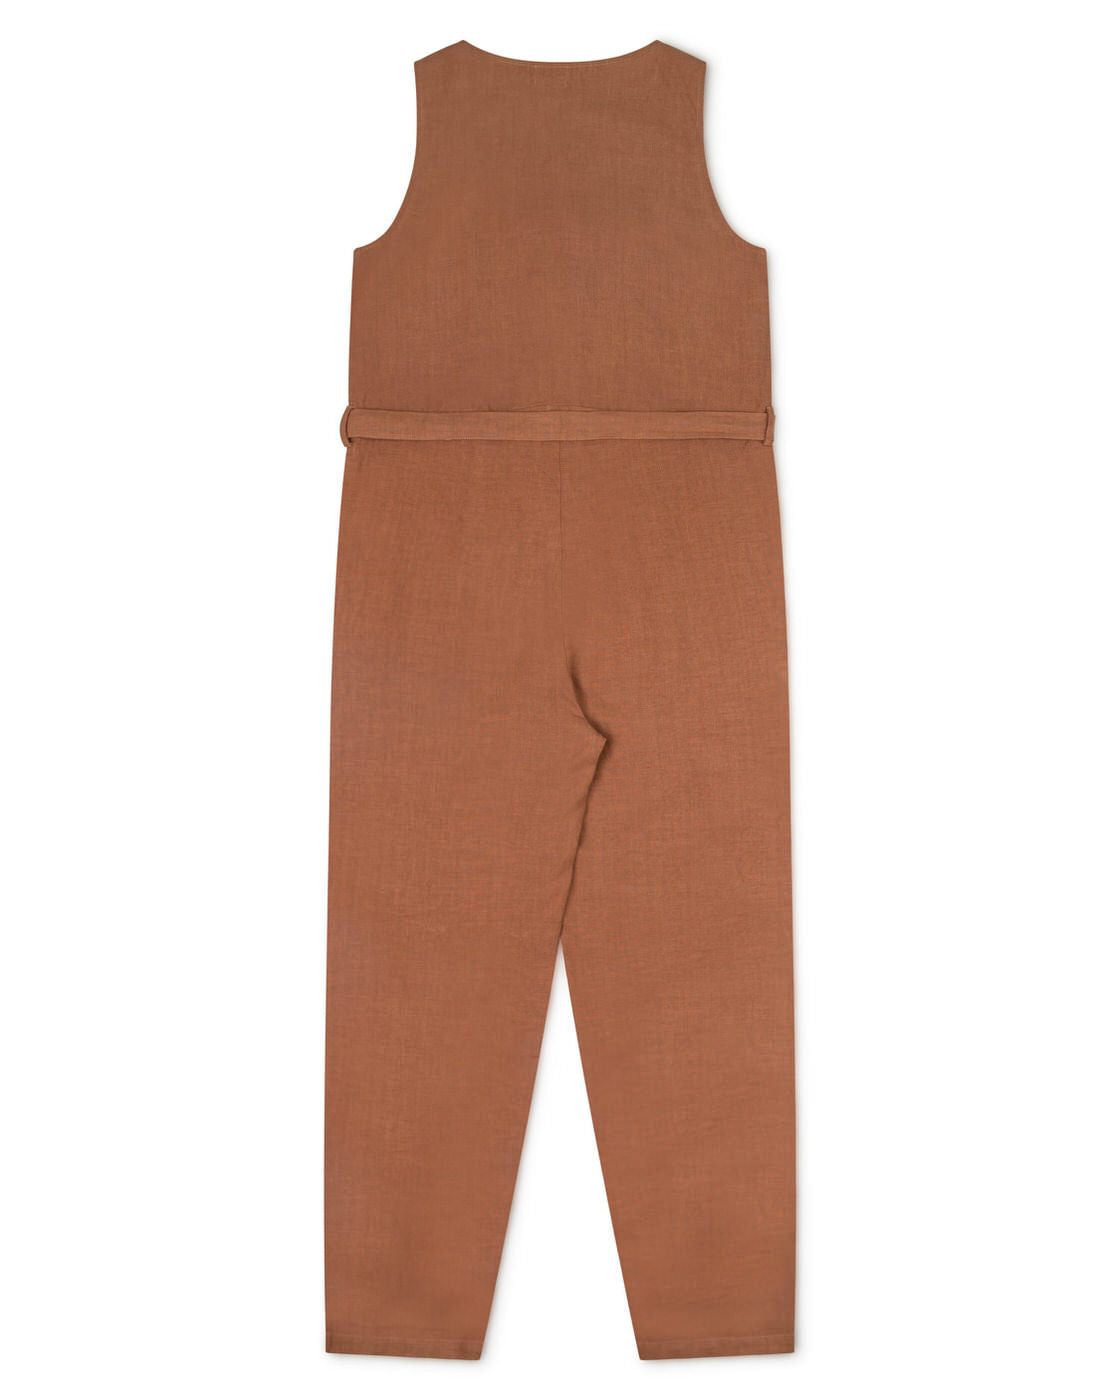 Brown linen russet jumpsuit from Matona